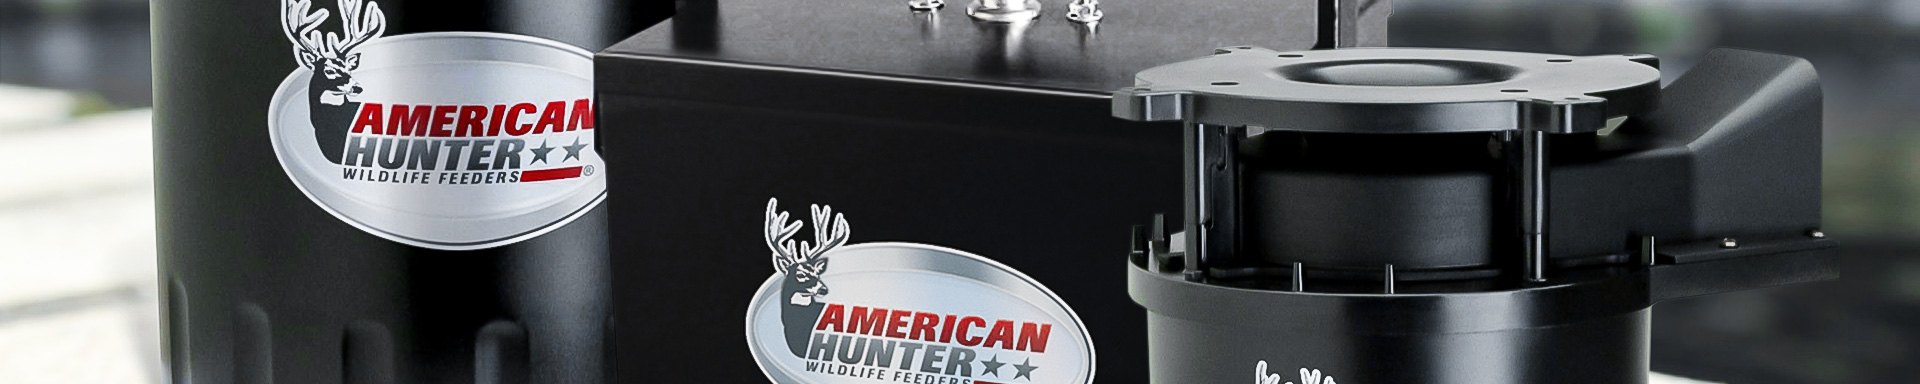 American Hunter Game Feeders